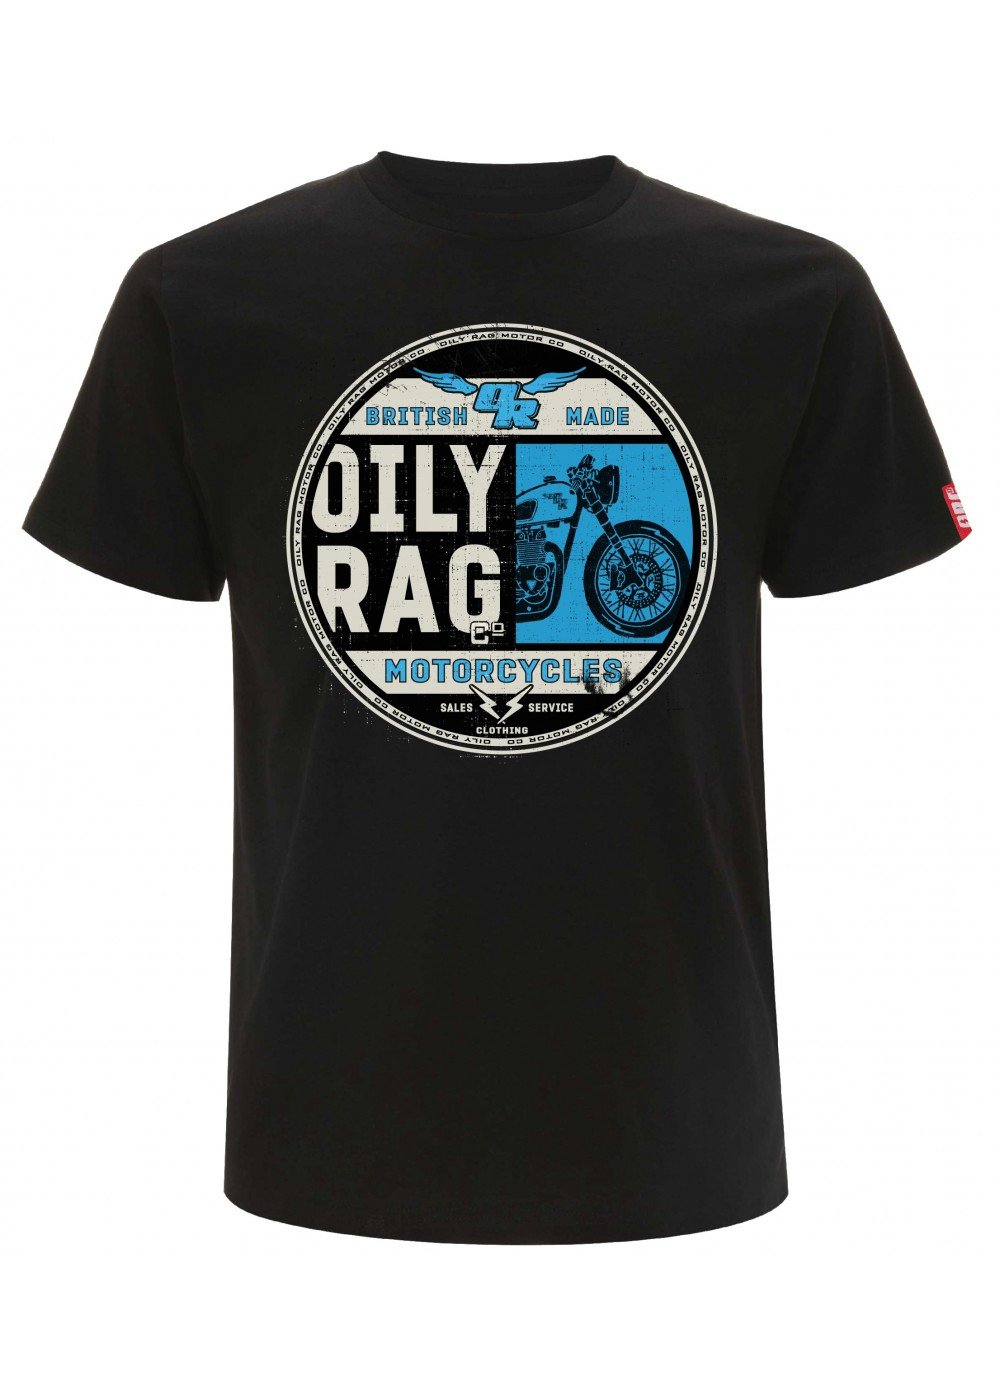 Oily Rag - Black Label - British Made T Shirt